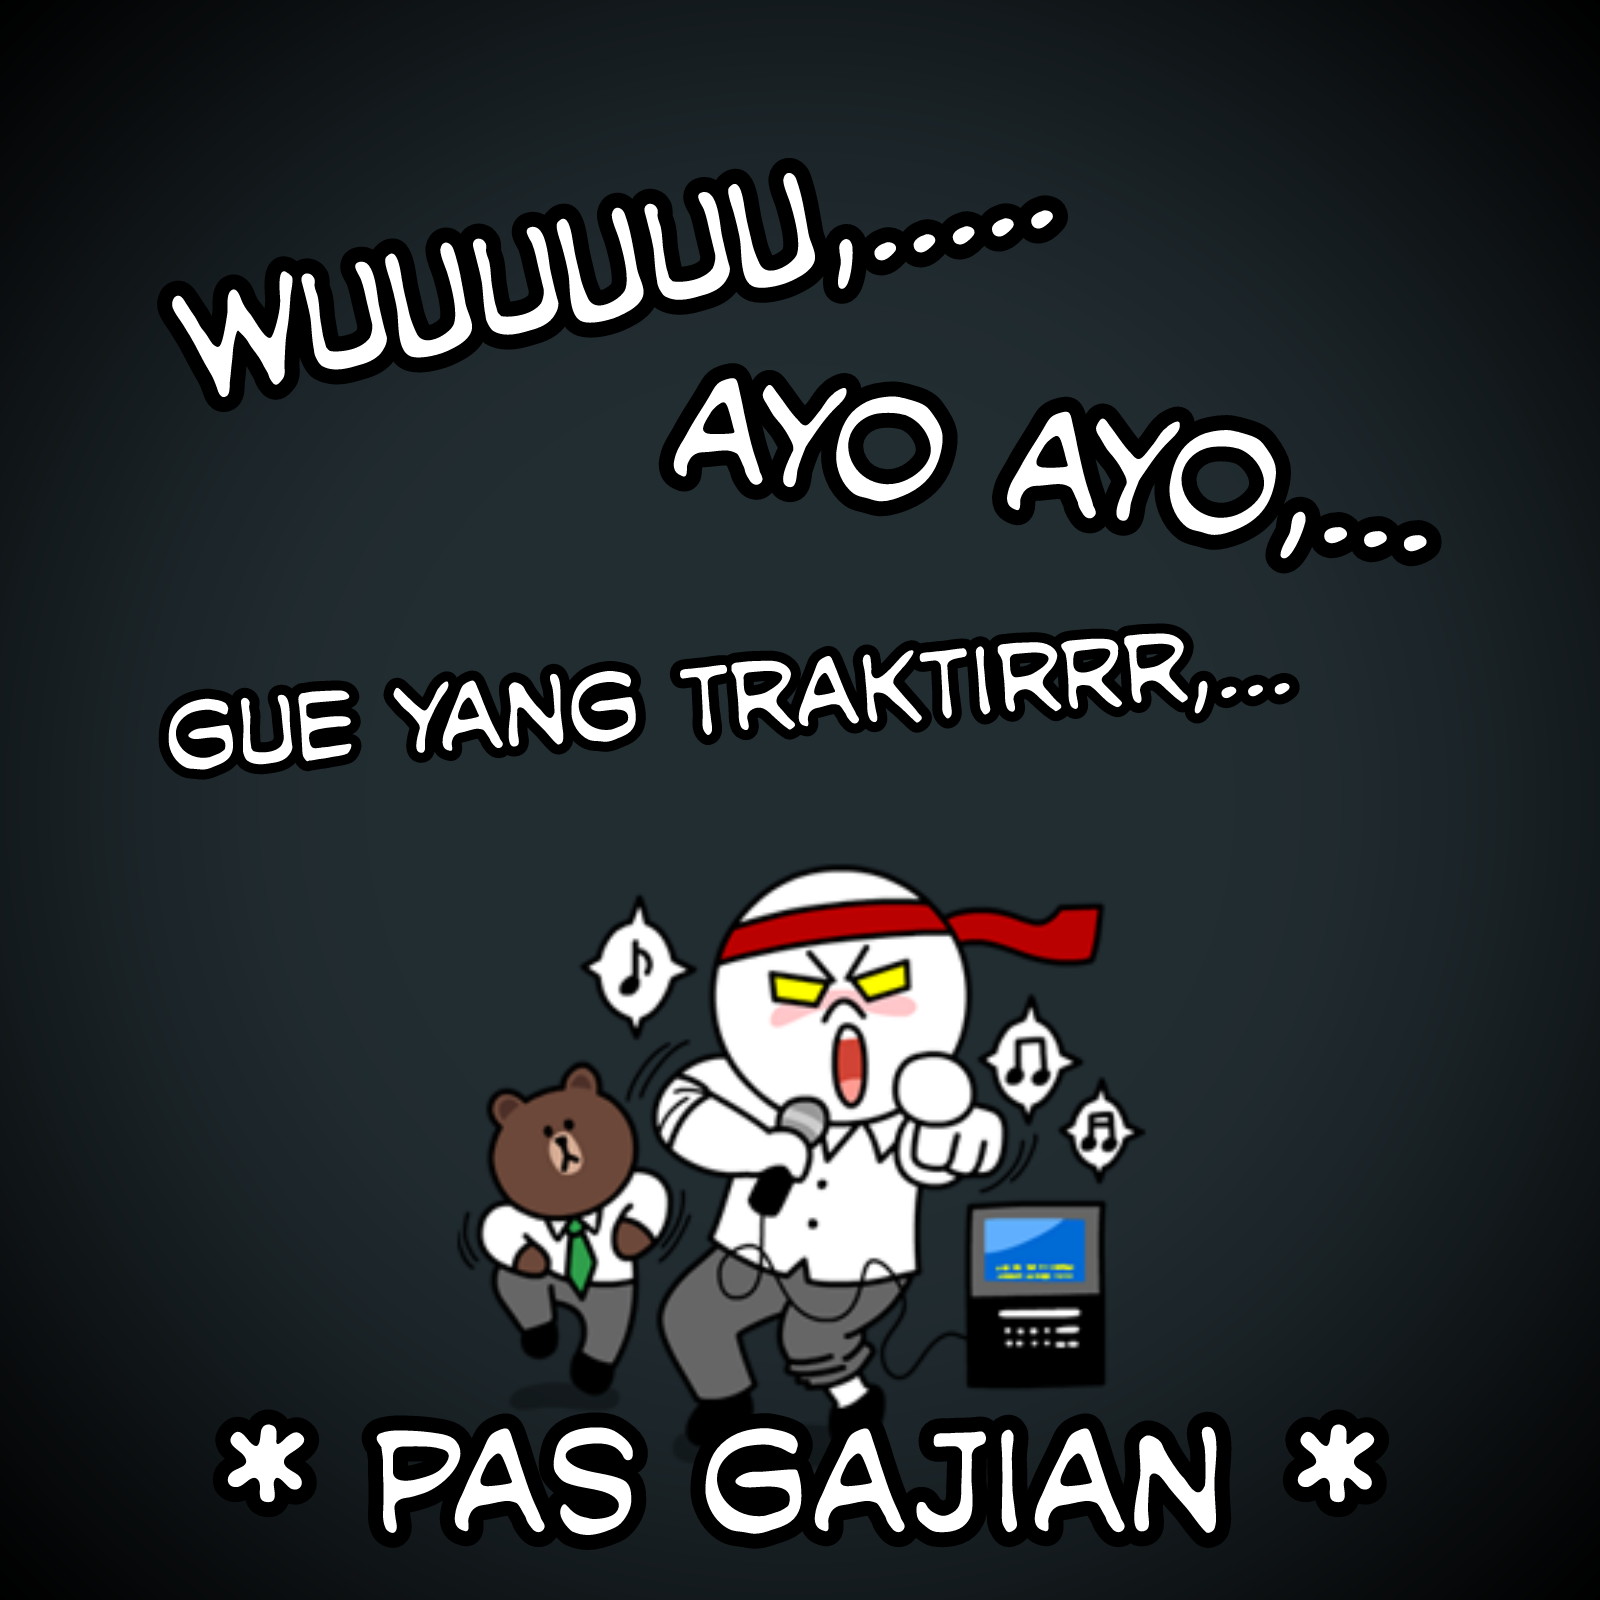 Baca comic strip, rage comic, meme comic, web toon, web comic bahasa Indonesia